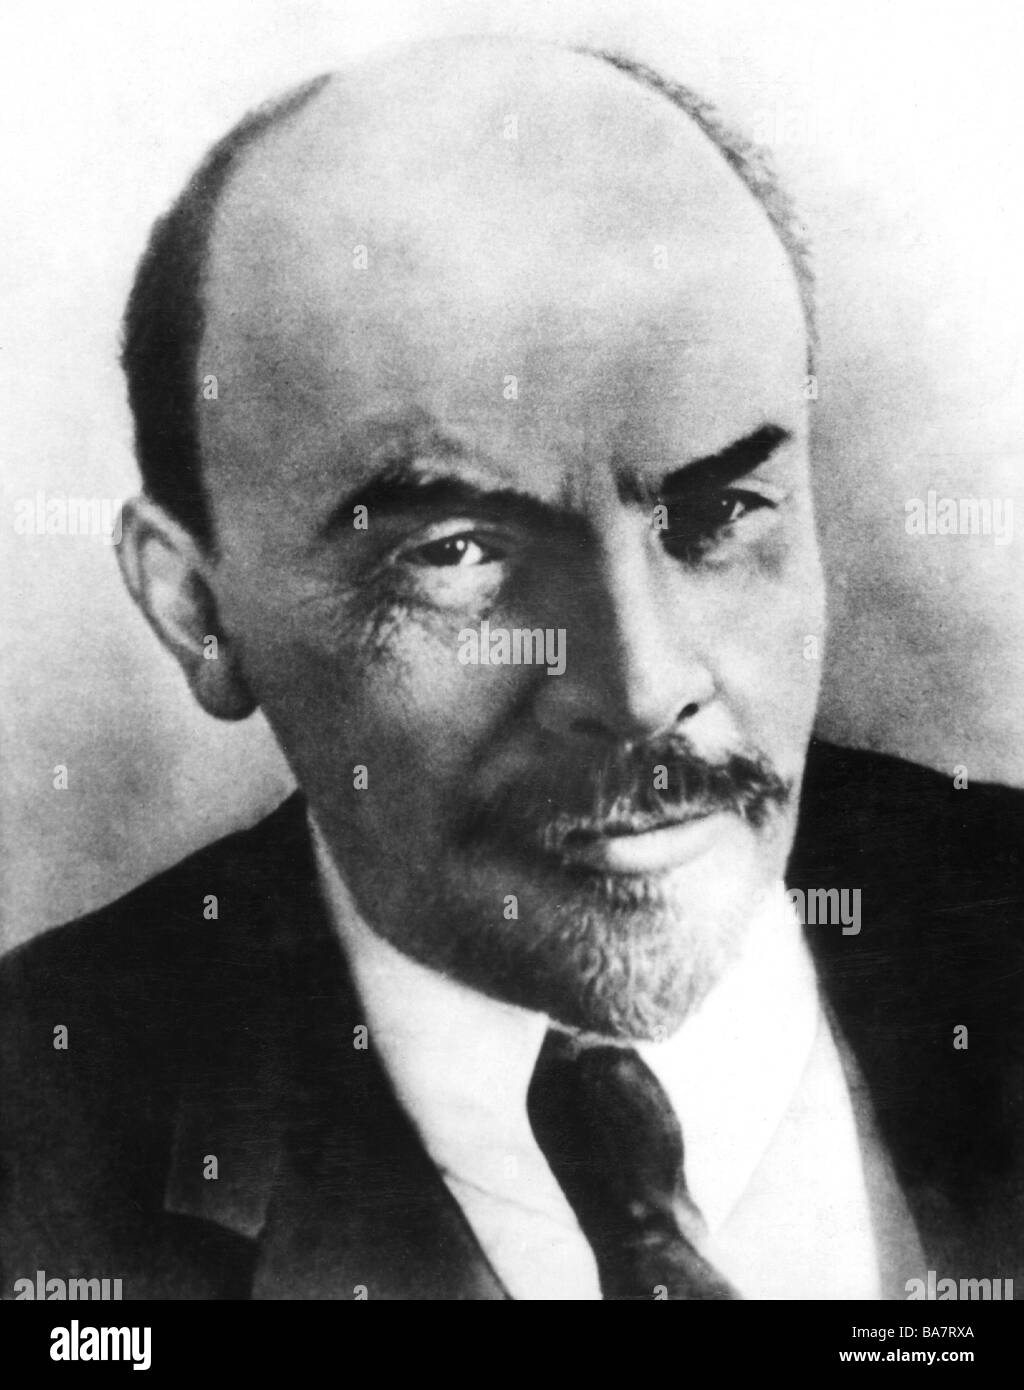 Lenin (Vladimir Ilyich Ulyanov), 22.4.1870 - 21.1.1924, Russian politician, portrait, circa 1918, Stock Photo